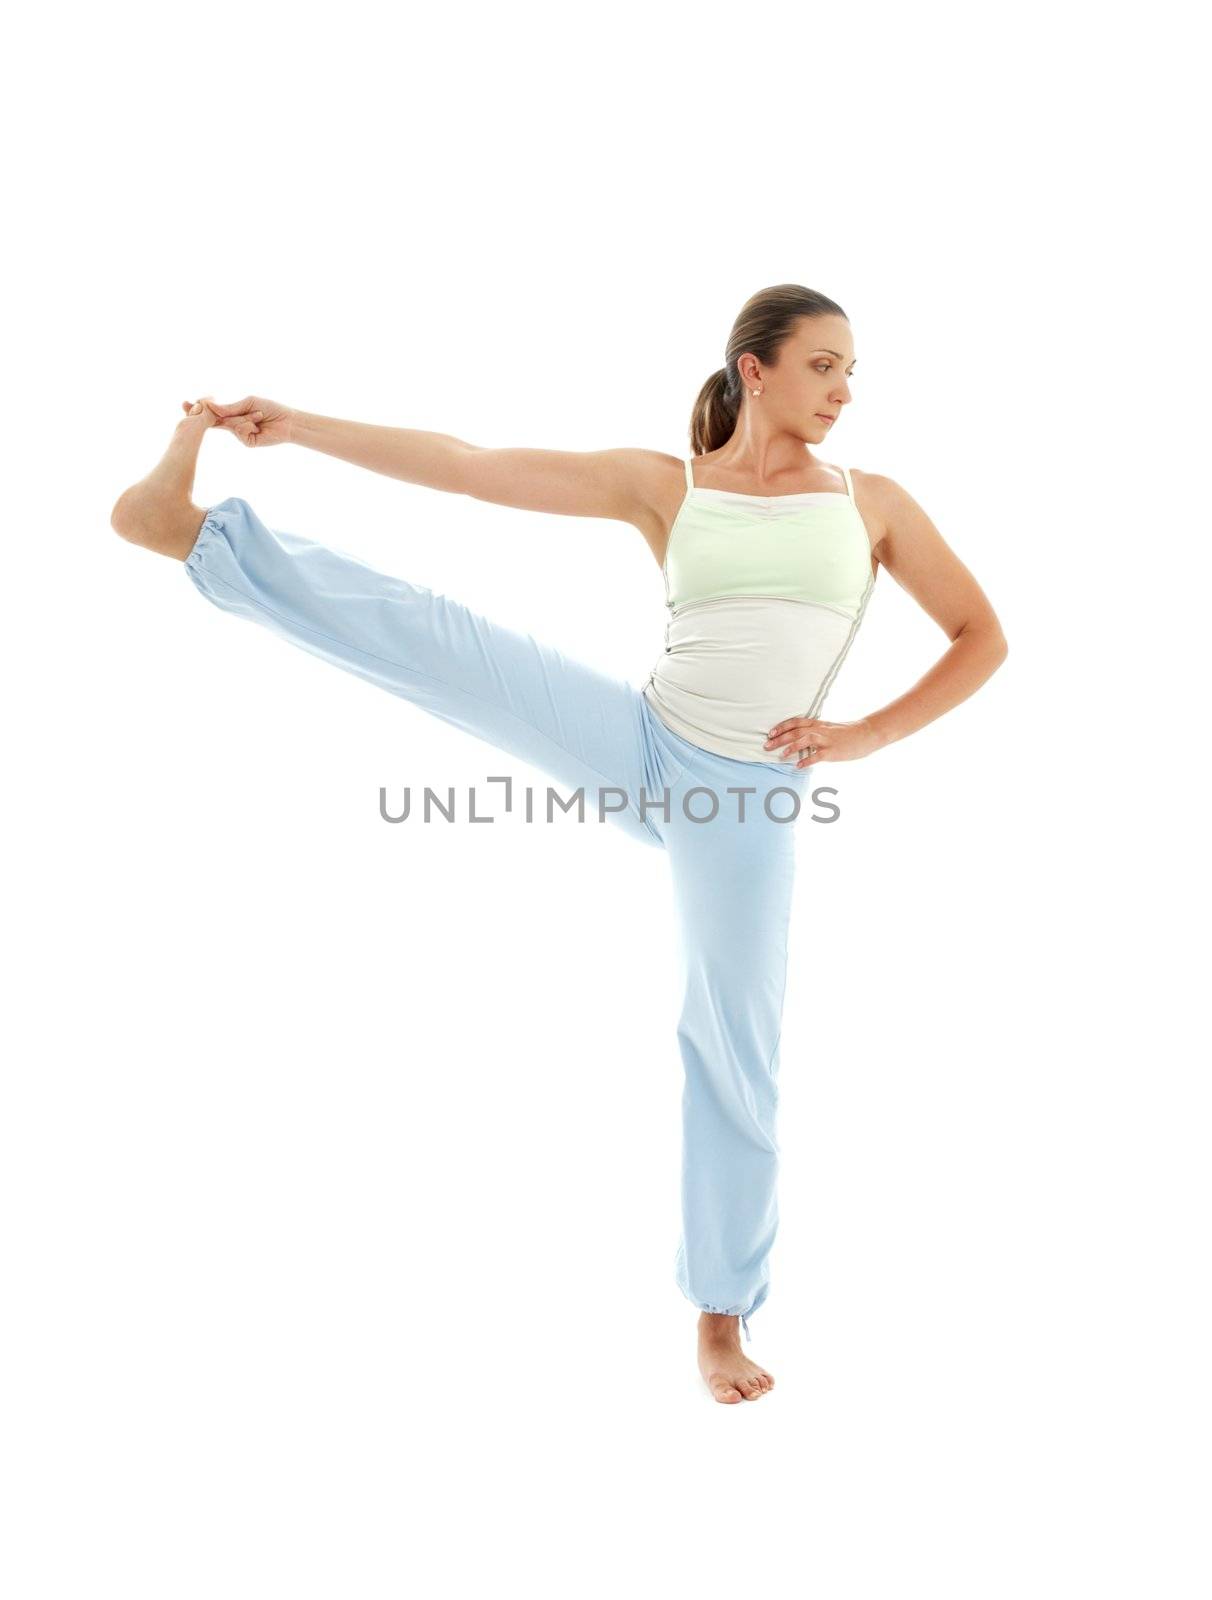 yoga standing #2 by dolgachov